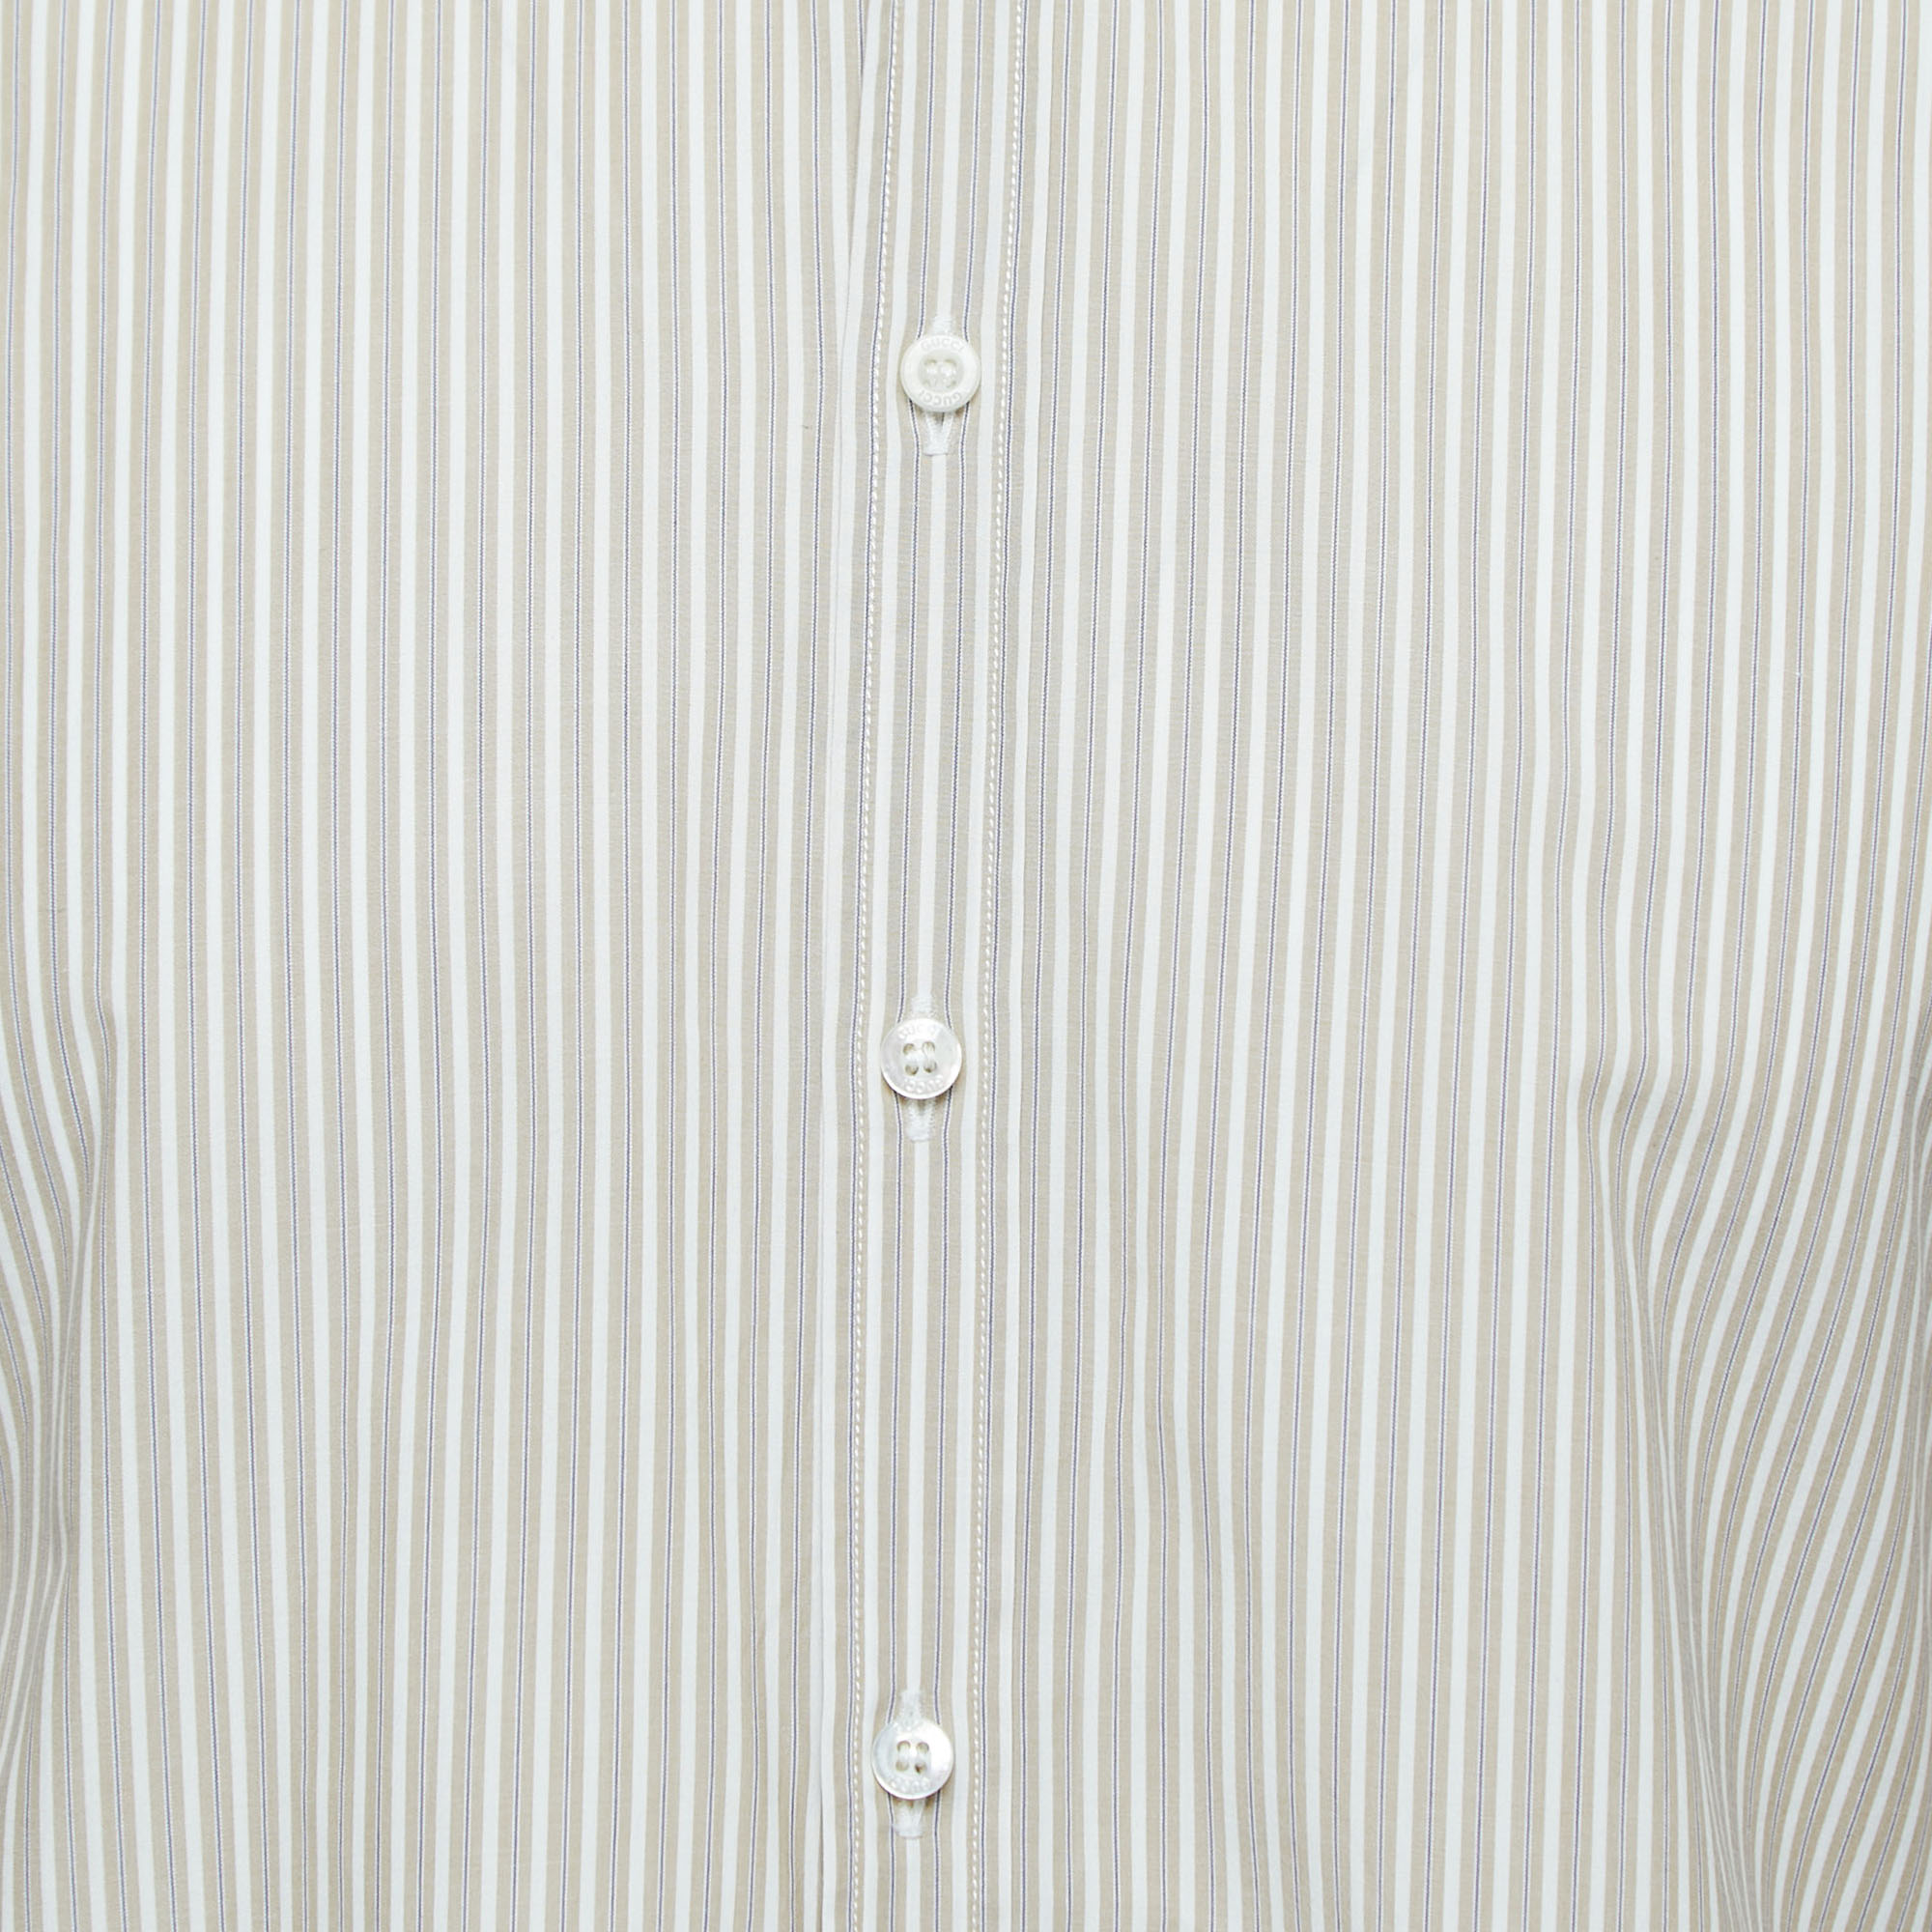 Gucci Beige Pinstripe Cotton Button Front Double Cuff Shirt M